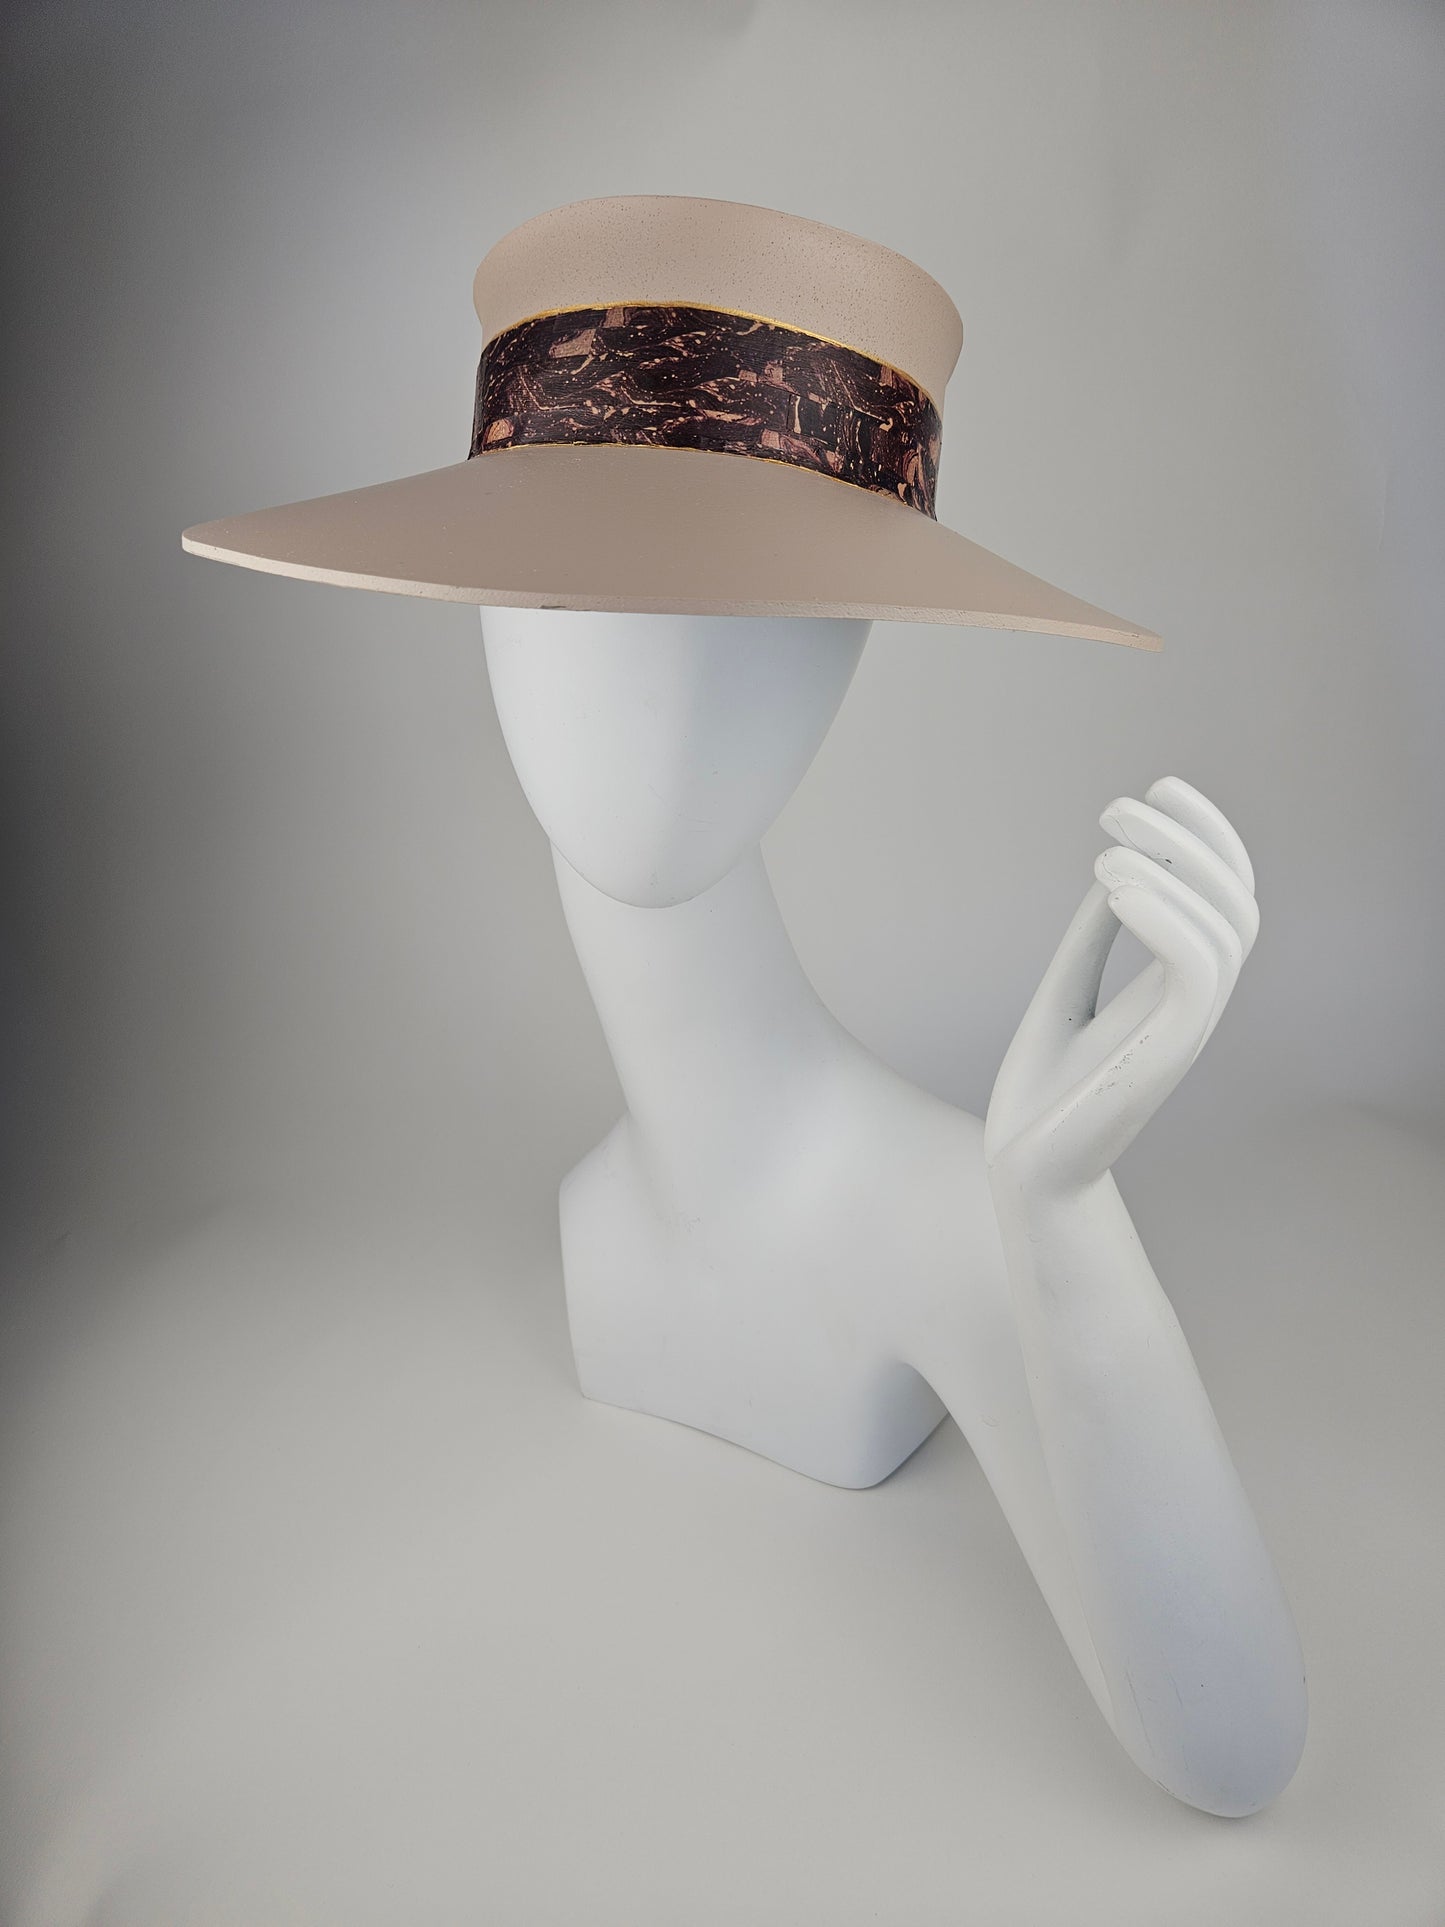 Tall Peach Gray Audrey Foam Sun Visor Hat with Lovely Dark Purple Marbled Band: Tea, Walks, Brunch, Fancy, Golf, Summer, Church, No Headache, Pool